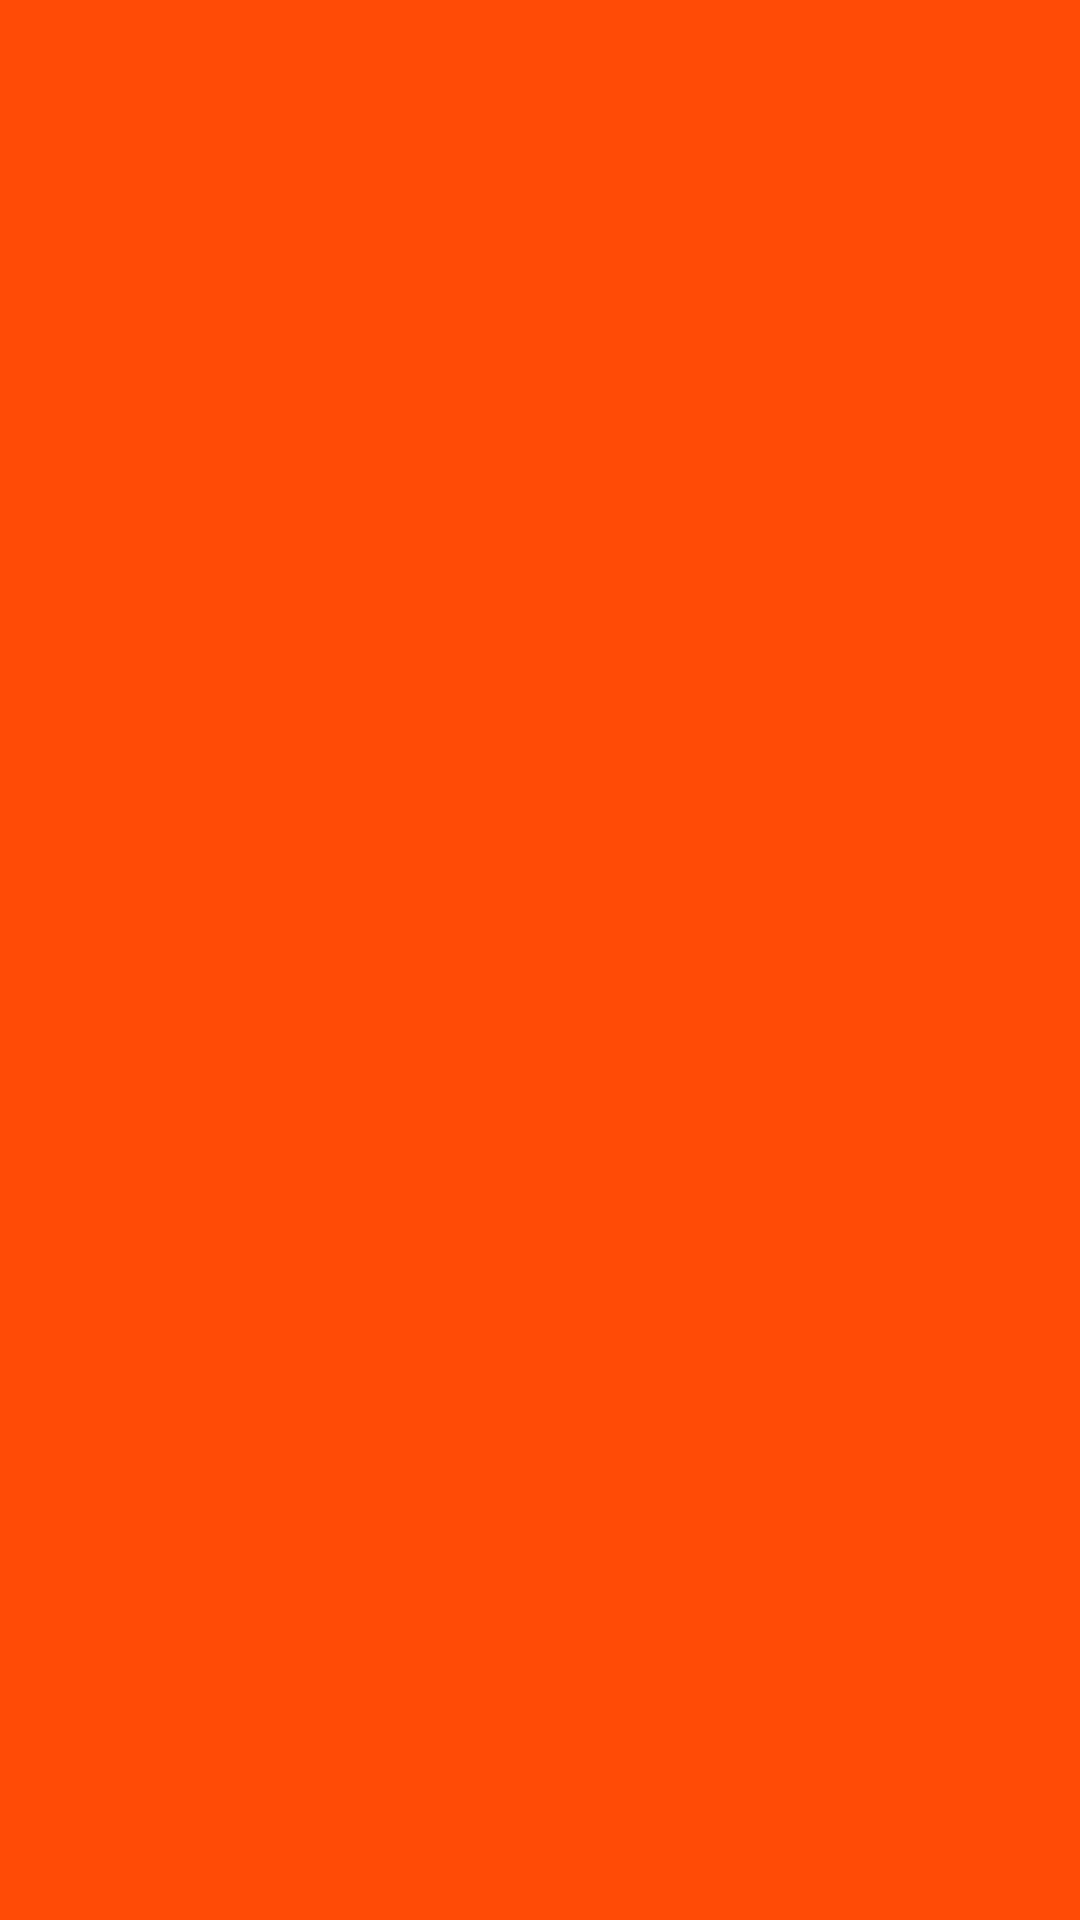 Dark Orange Plain Hd Iphone Wallpaper Wallpaper